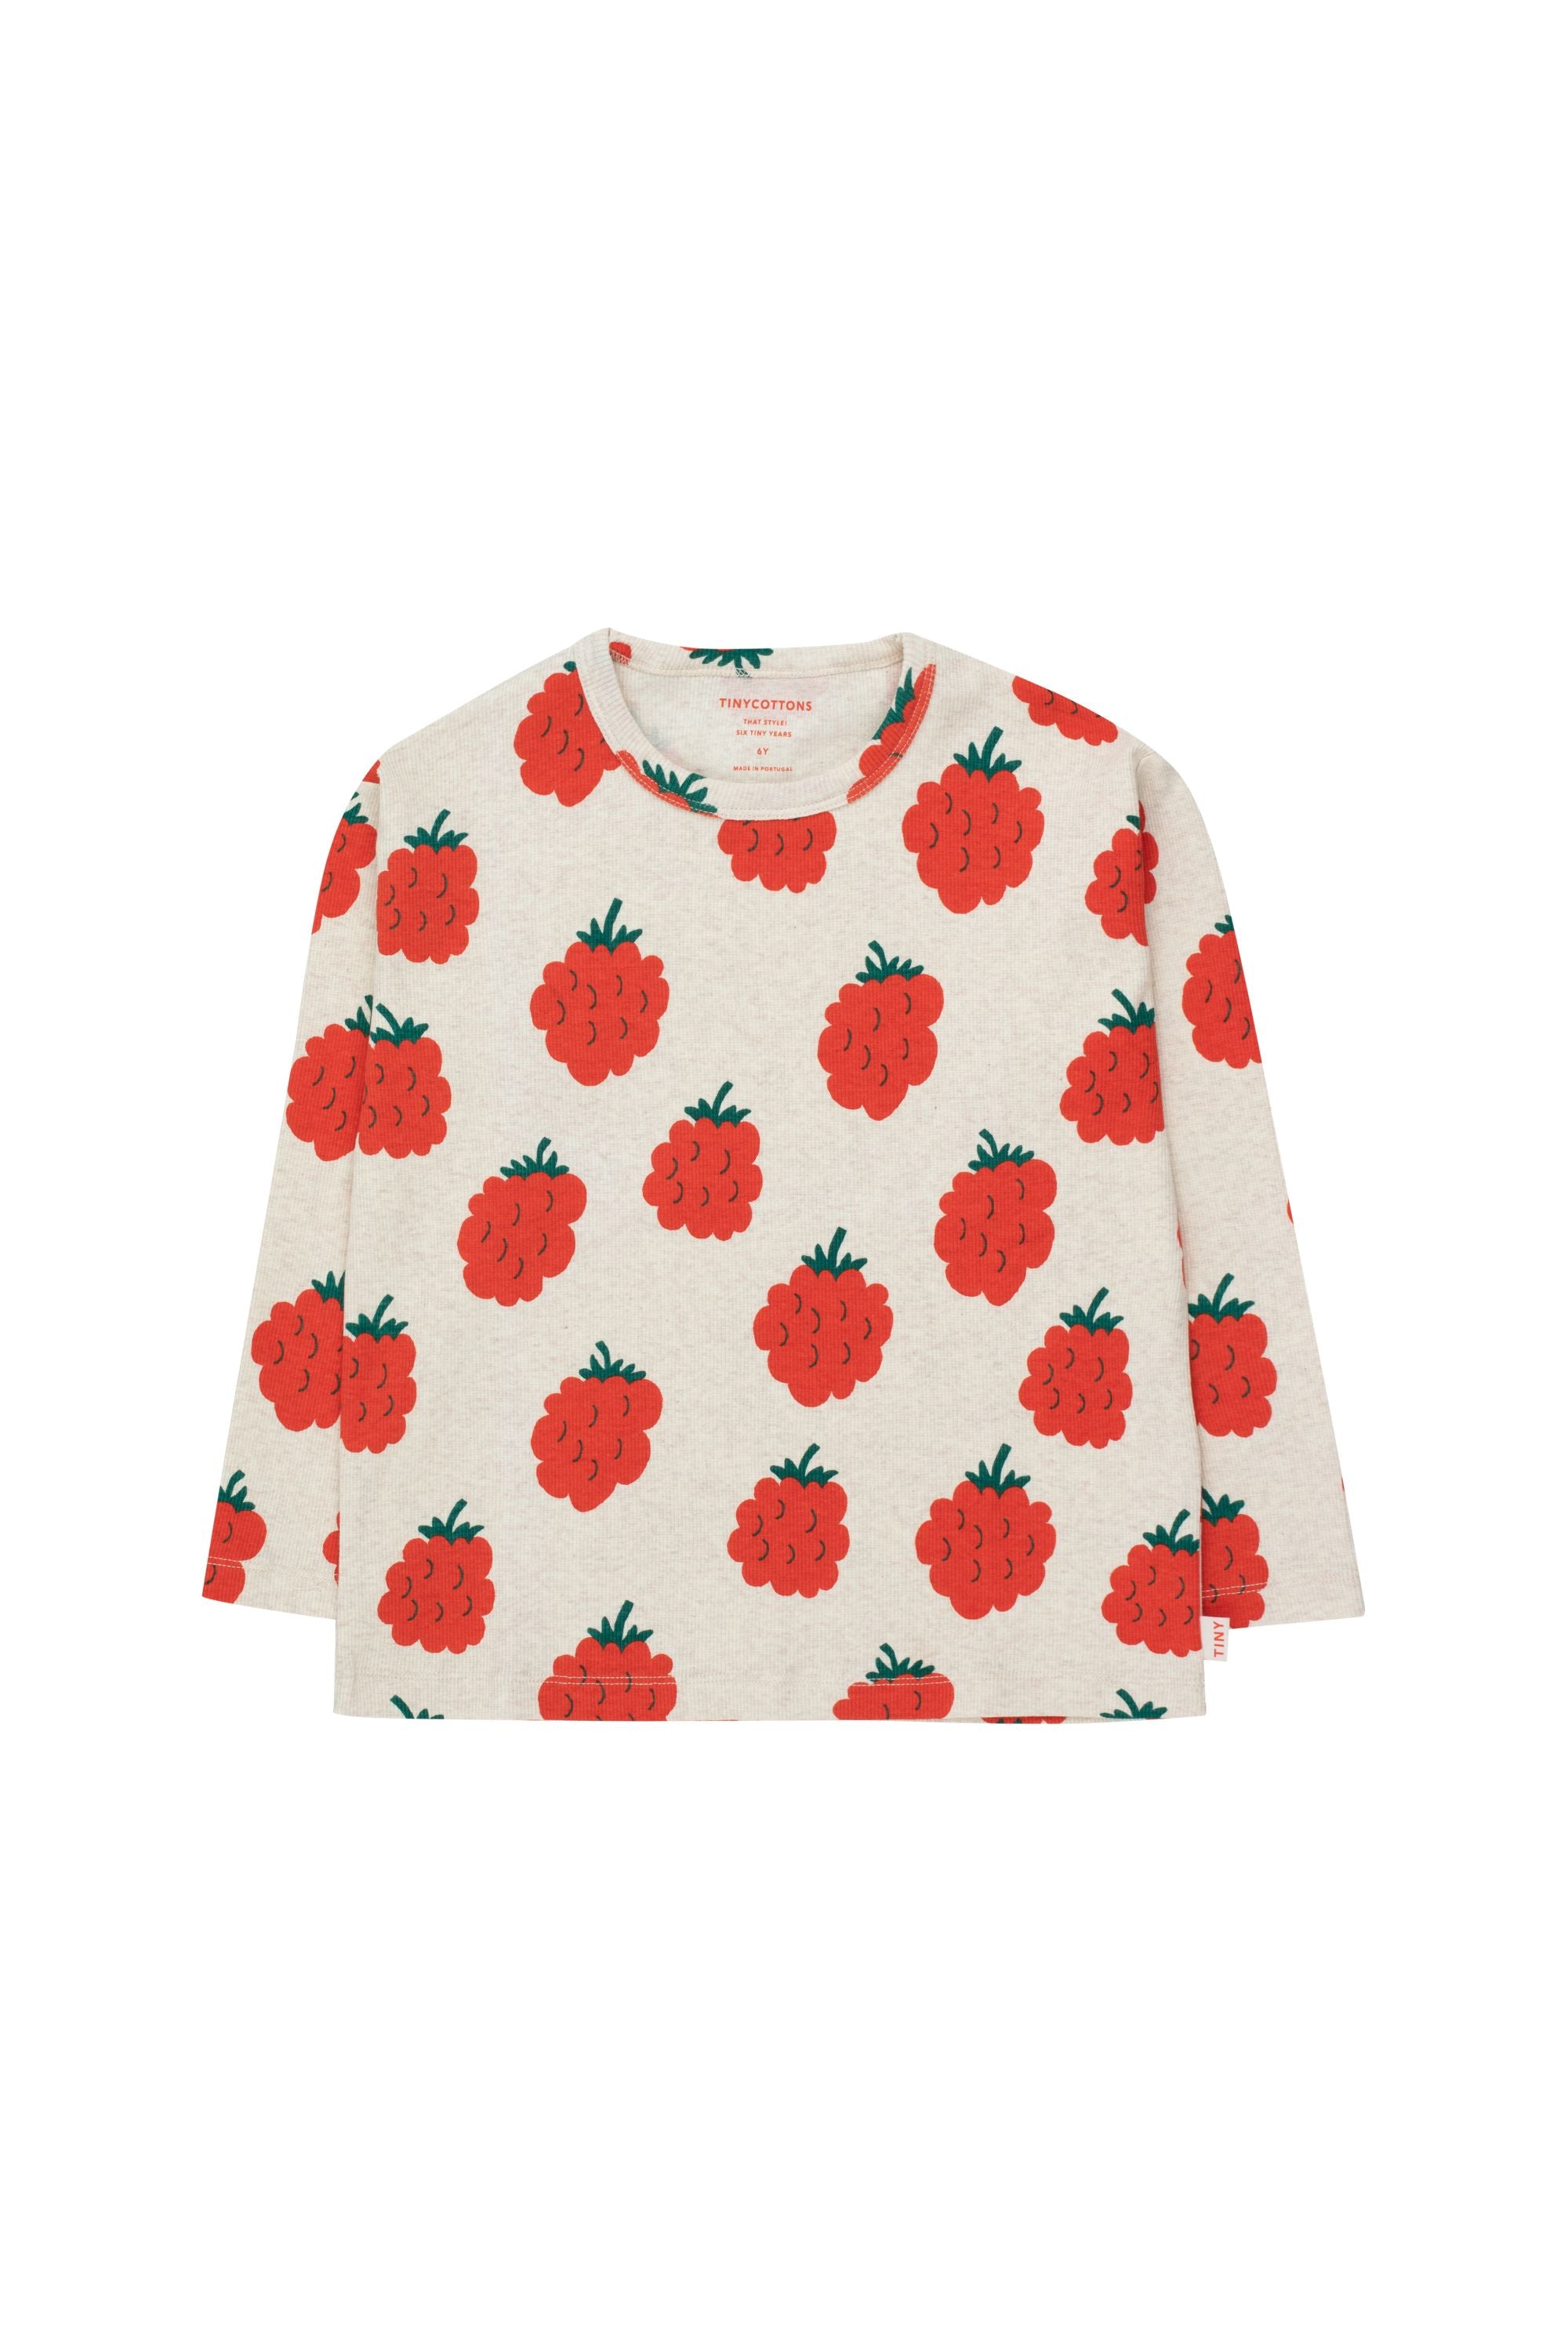 Tiny Cottons - Raspberry T-Shirt